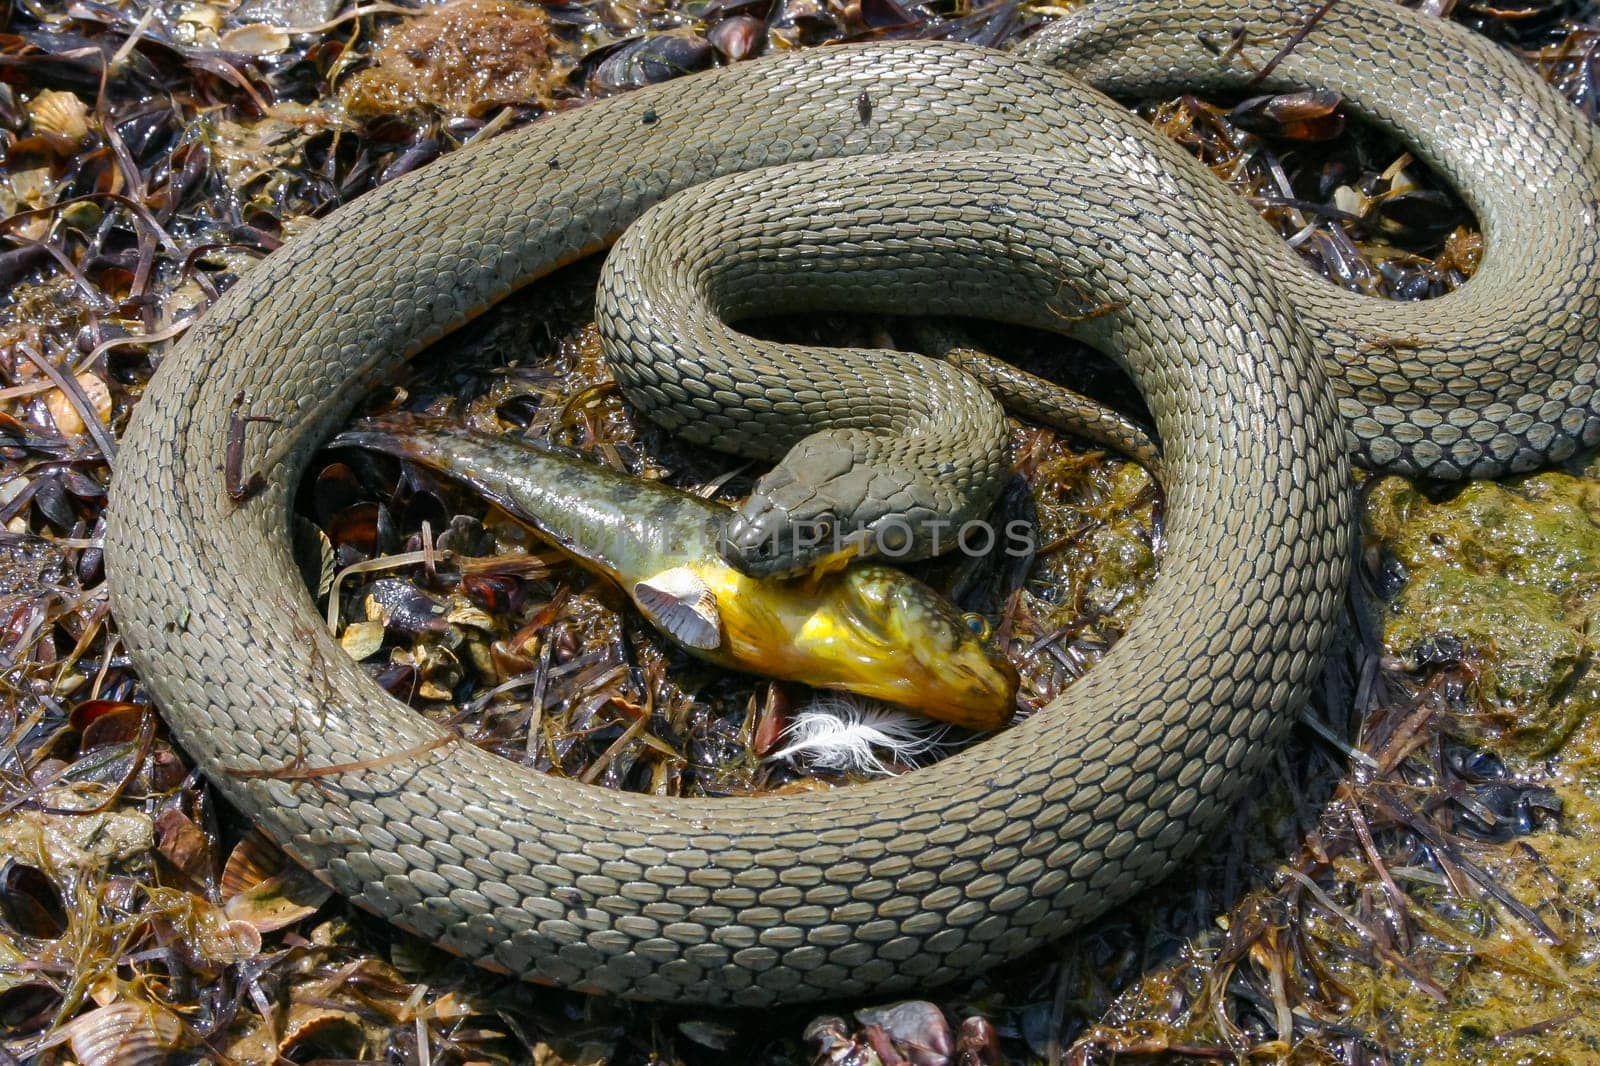 The dice snake (Natrix tessellata) lies on a stone, Tiligul estuary, Ukraine by Hydrobiolog